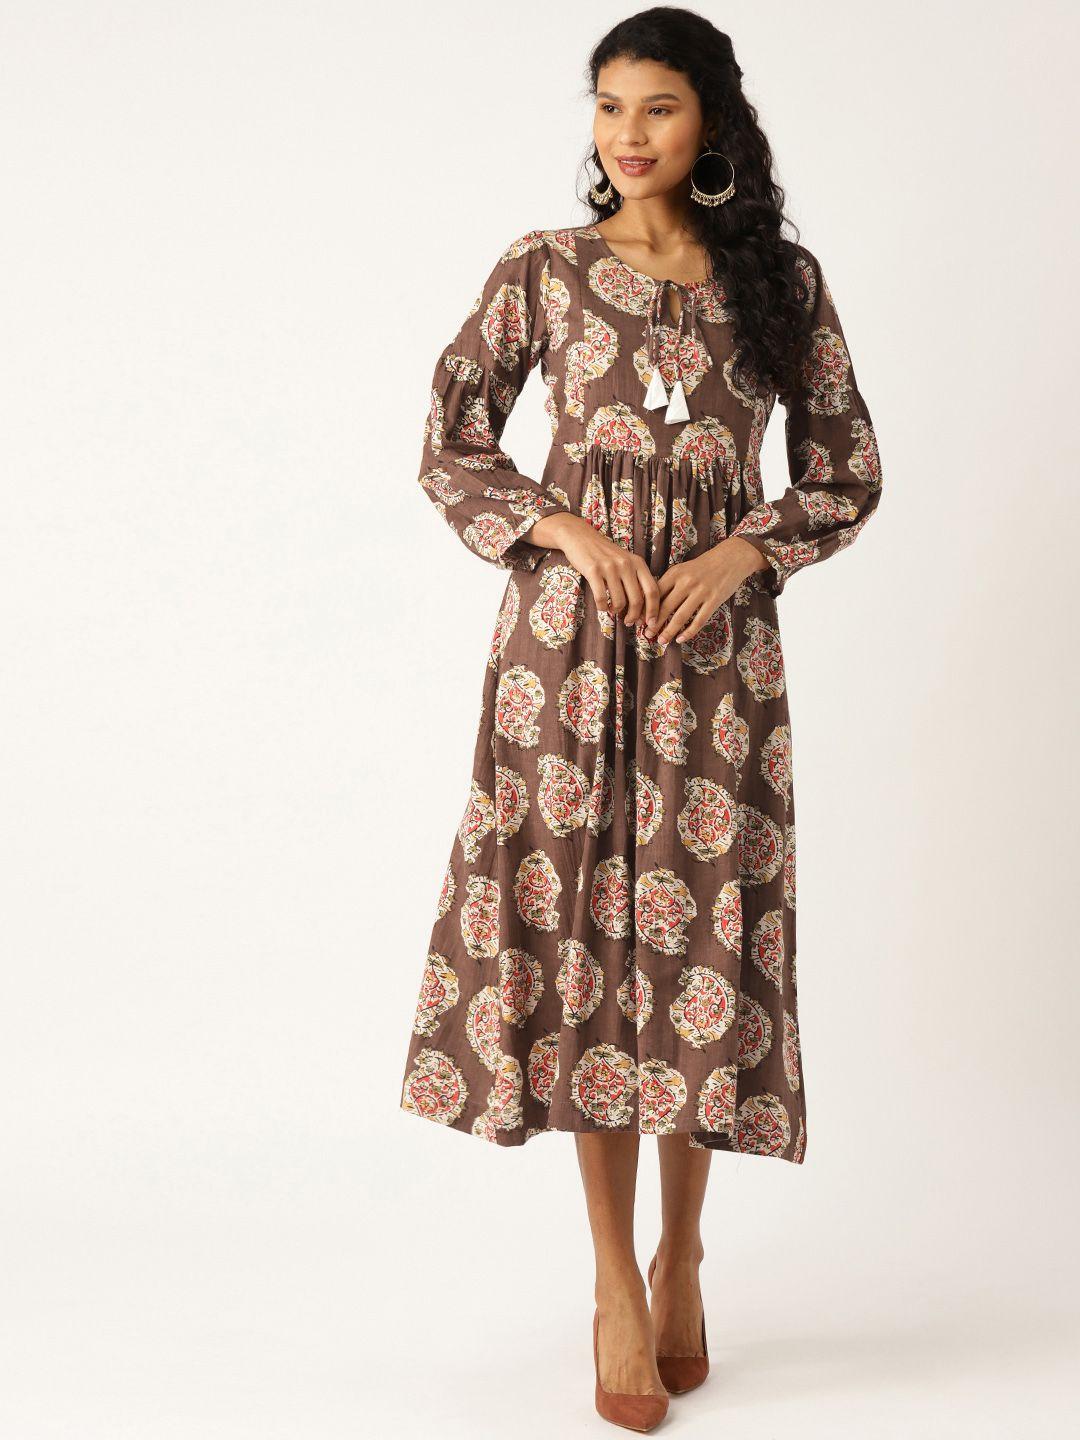 shae by sassafras women brown & off-white printed a-line dress